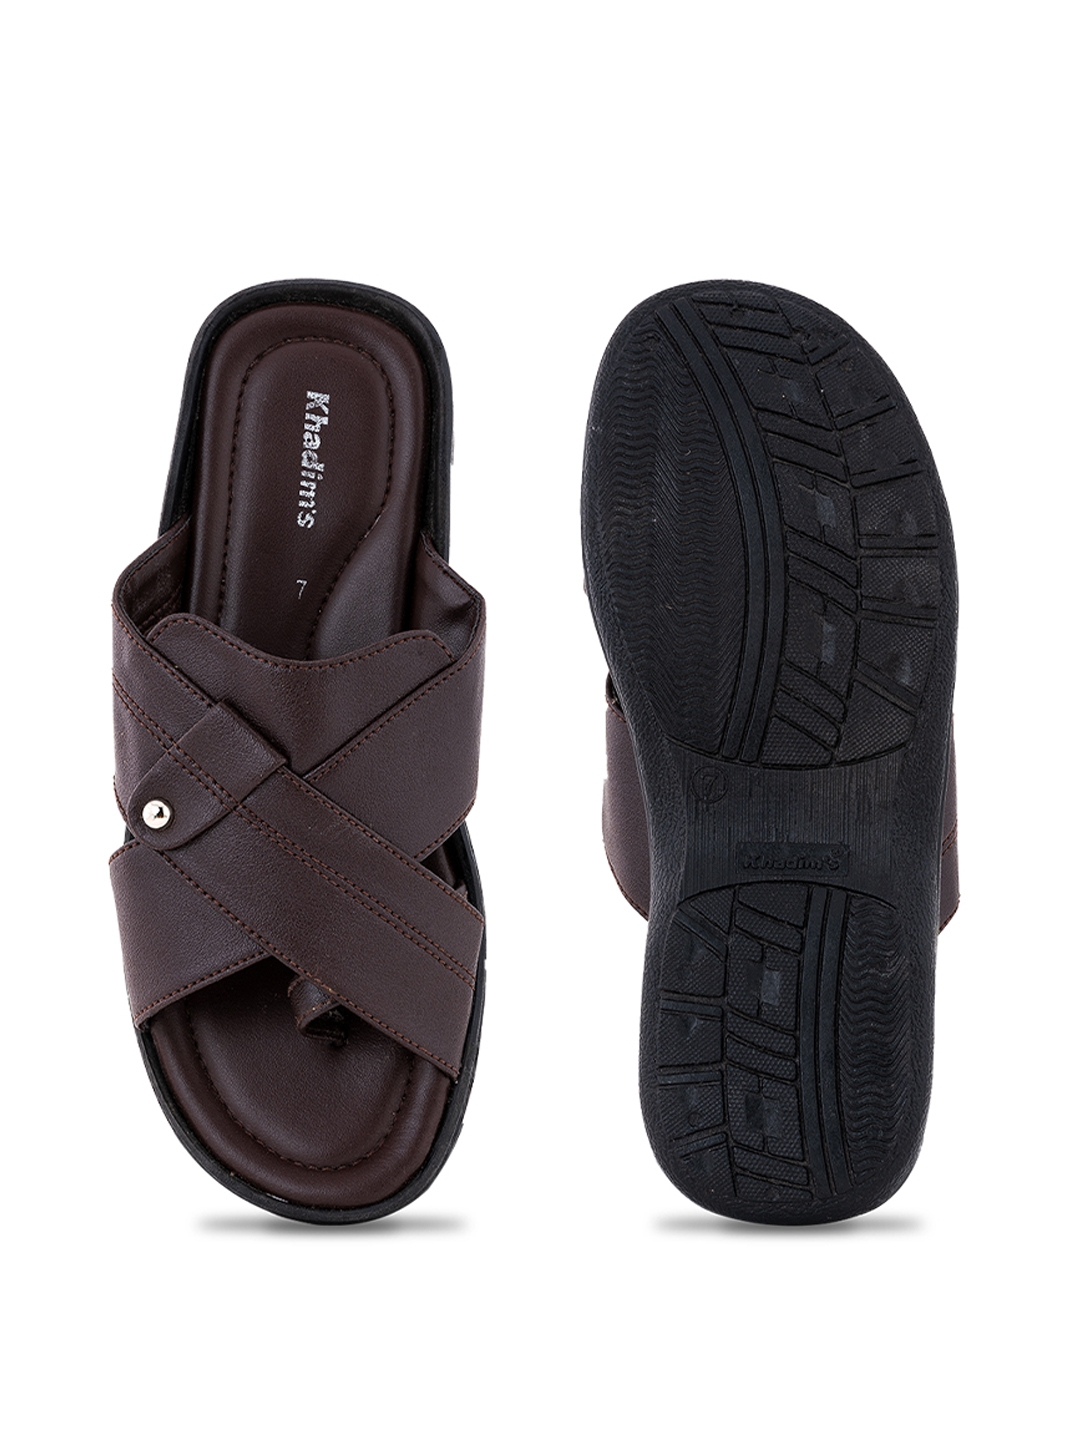 Buy khadims slippers for women in India @ Limeroad-sgquangbinhtourist.com.vn